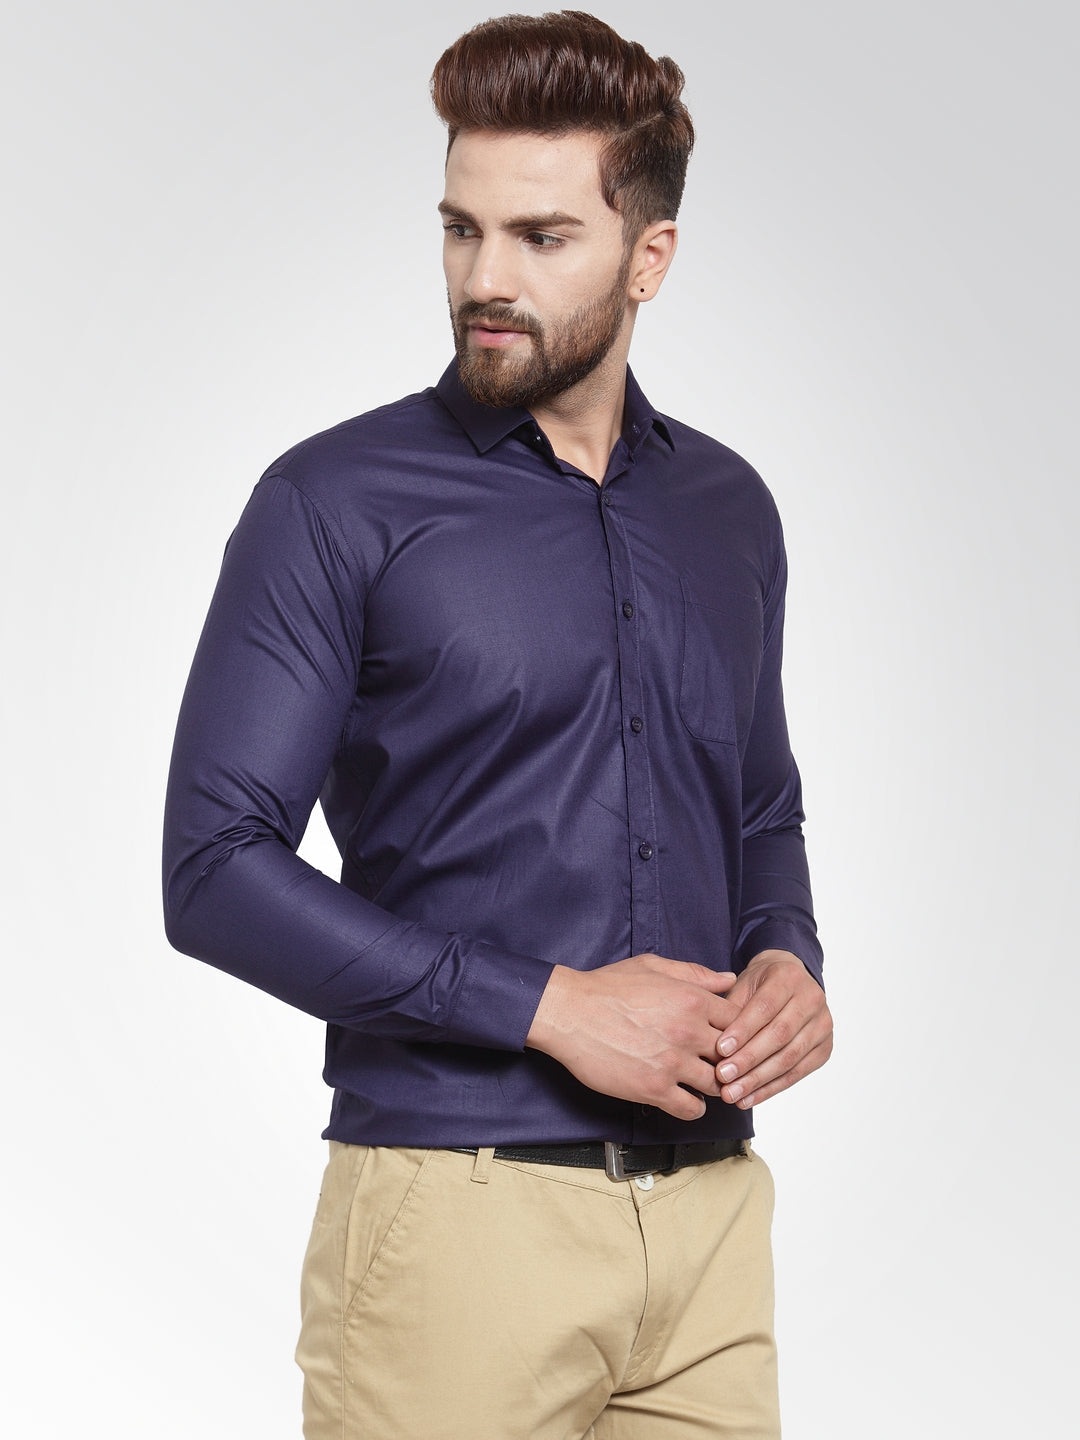 Men's Cotton Solid Navy Blue Formal Shirt's ( SF 361Navy ) - Jainish